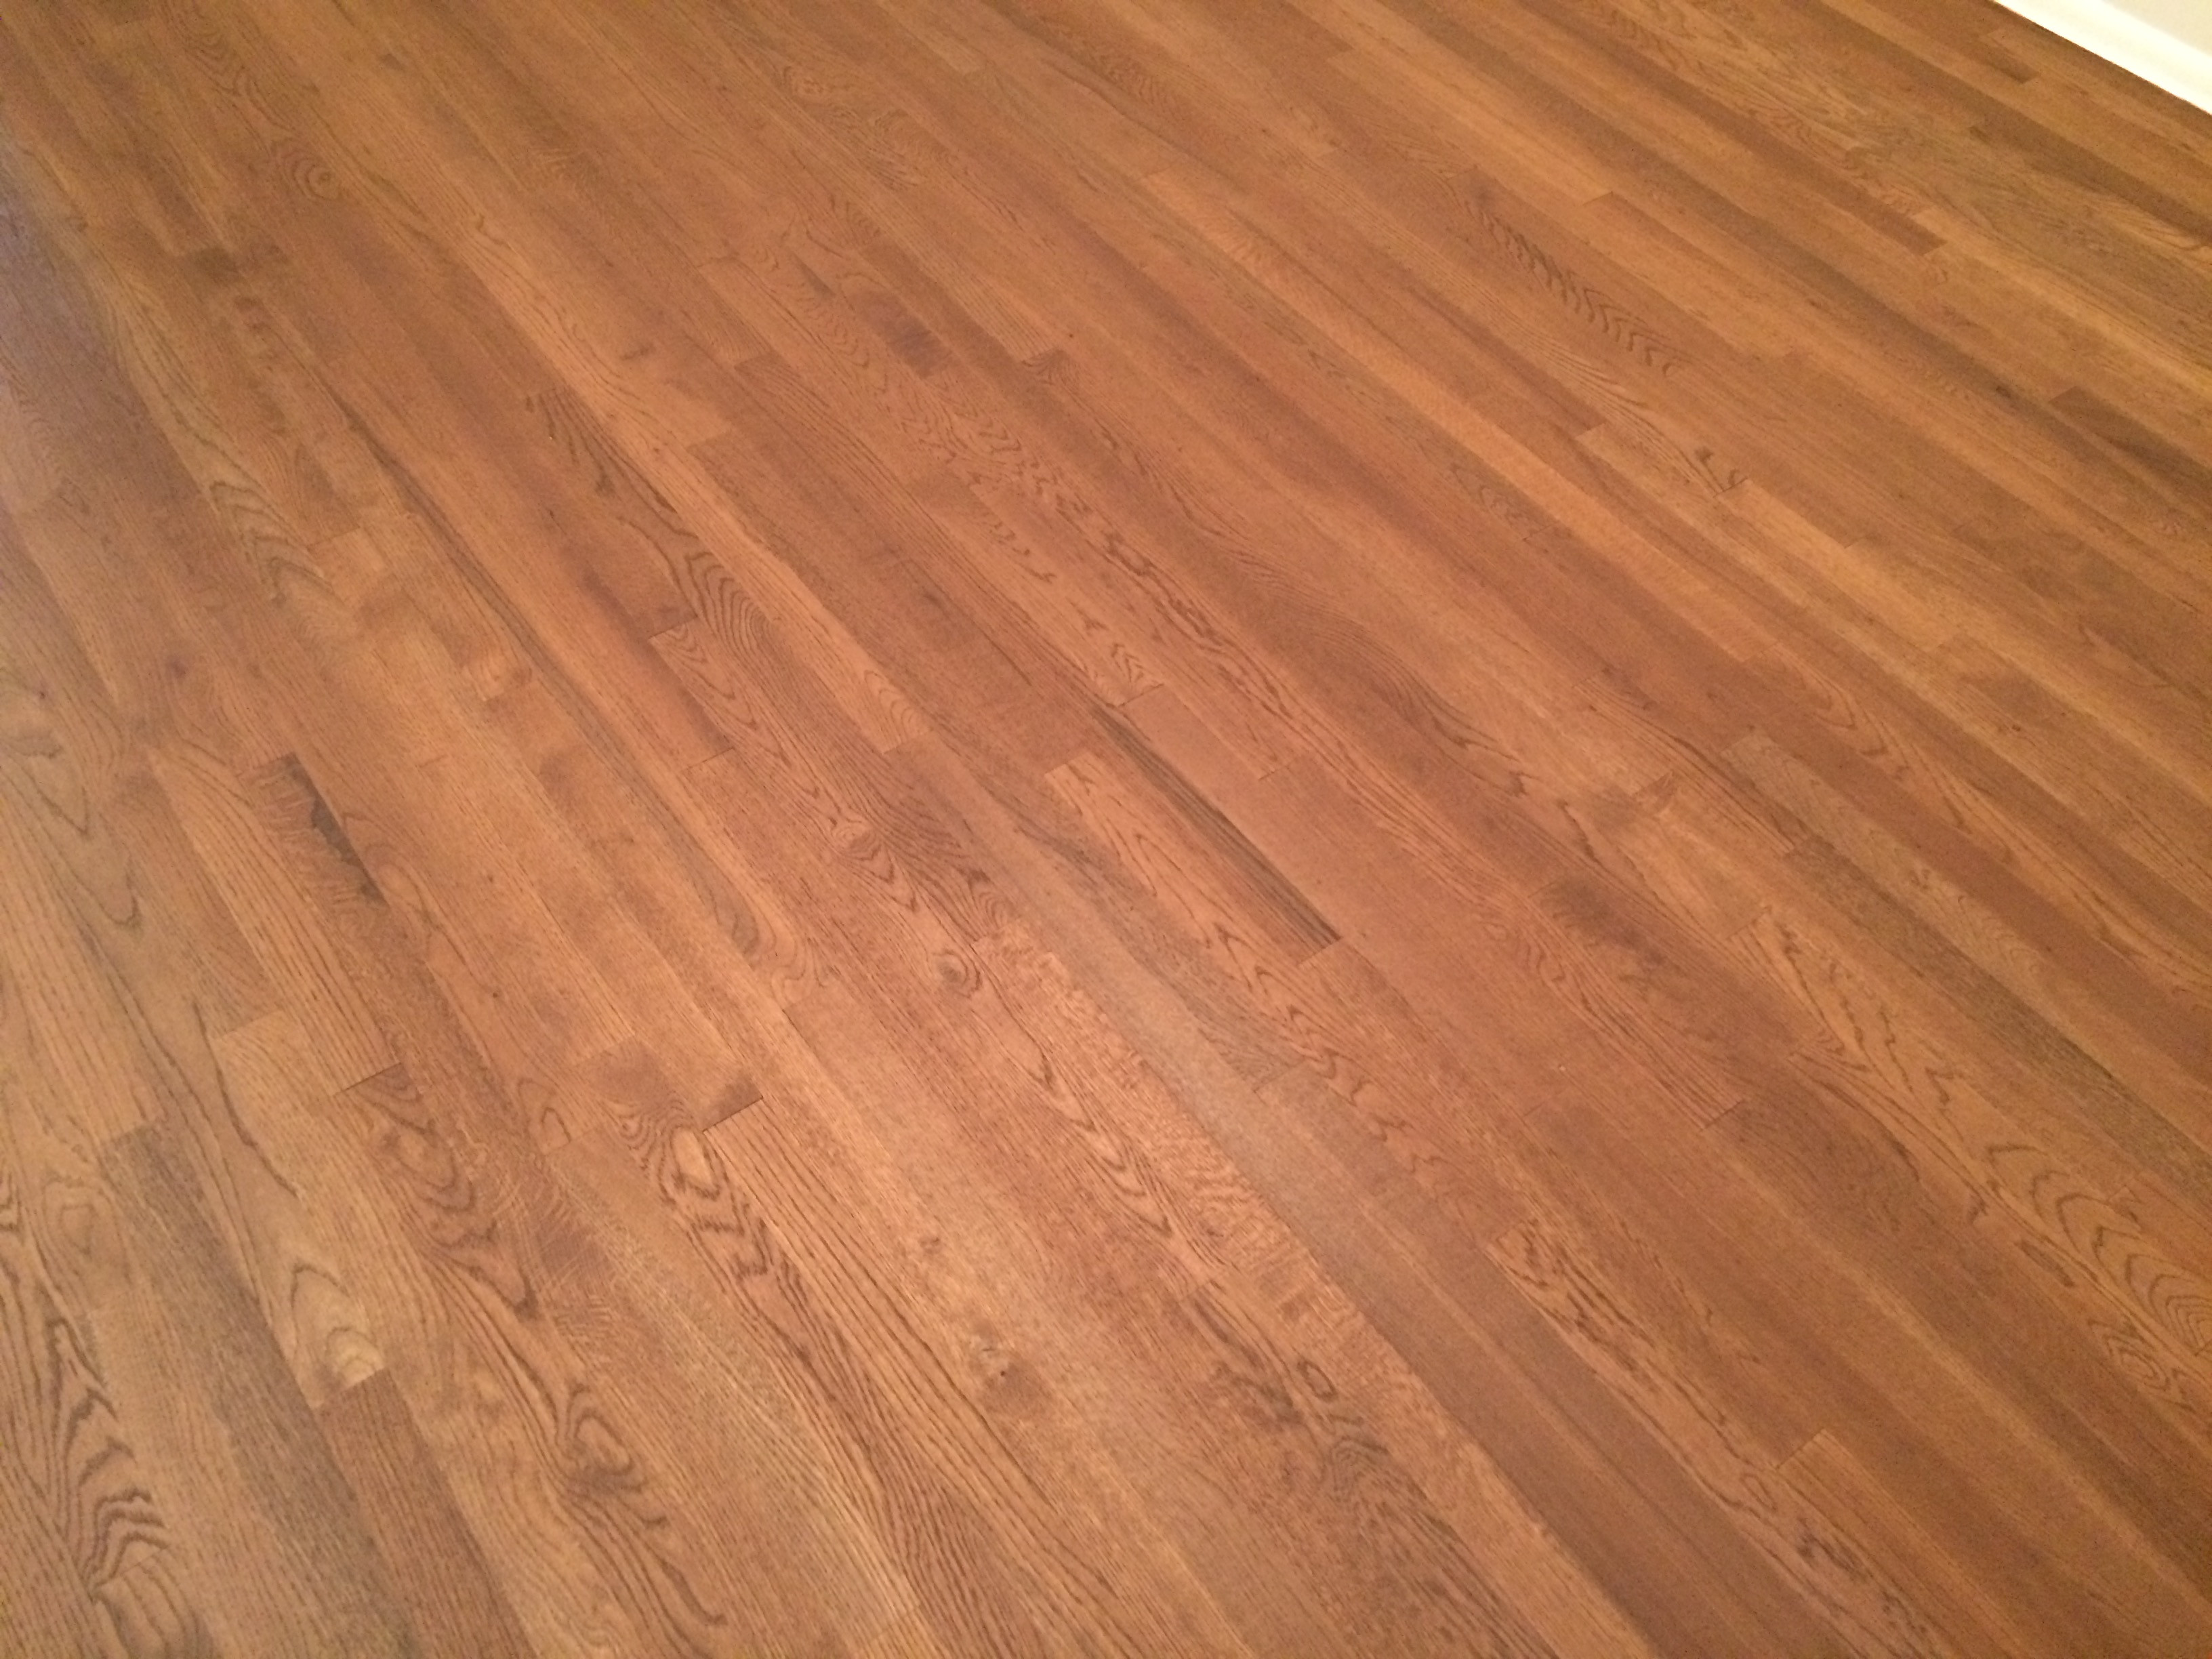 17 Stunning Hardwood Floor Repair south Jersey 2024 free download hardwood floor repair south jersey of flooring portfolio gorsegner brothers inside img 0435